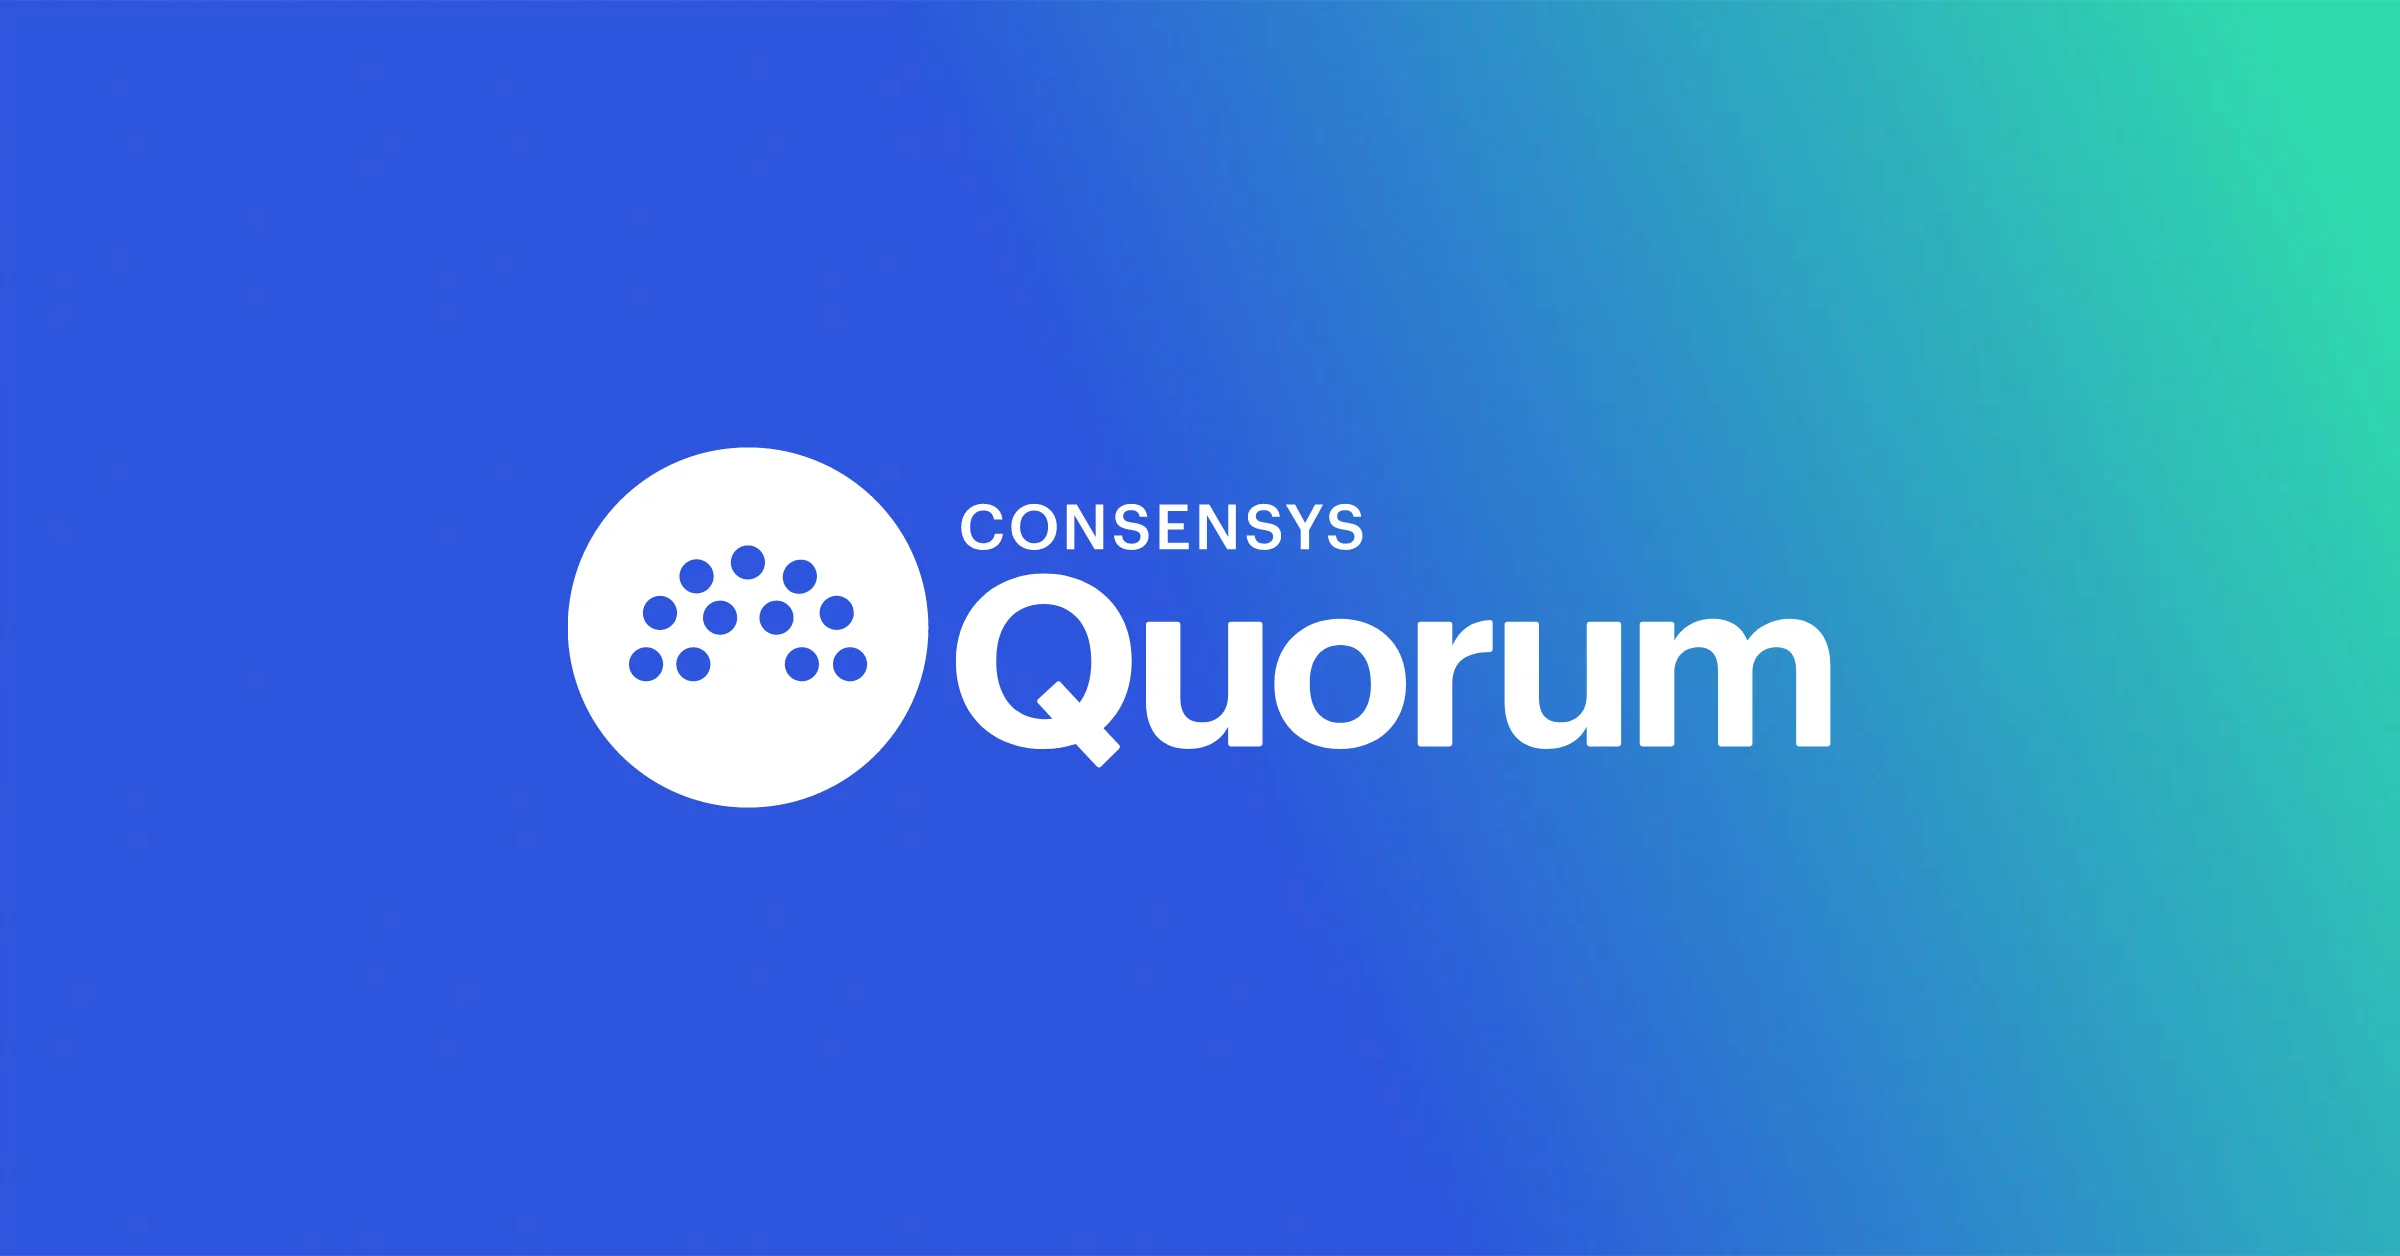 Image: ConsenSys Acquires Quorum® Platform from J.P. Morgan